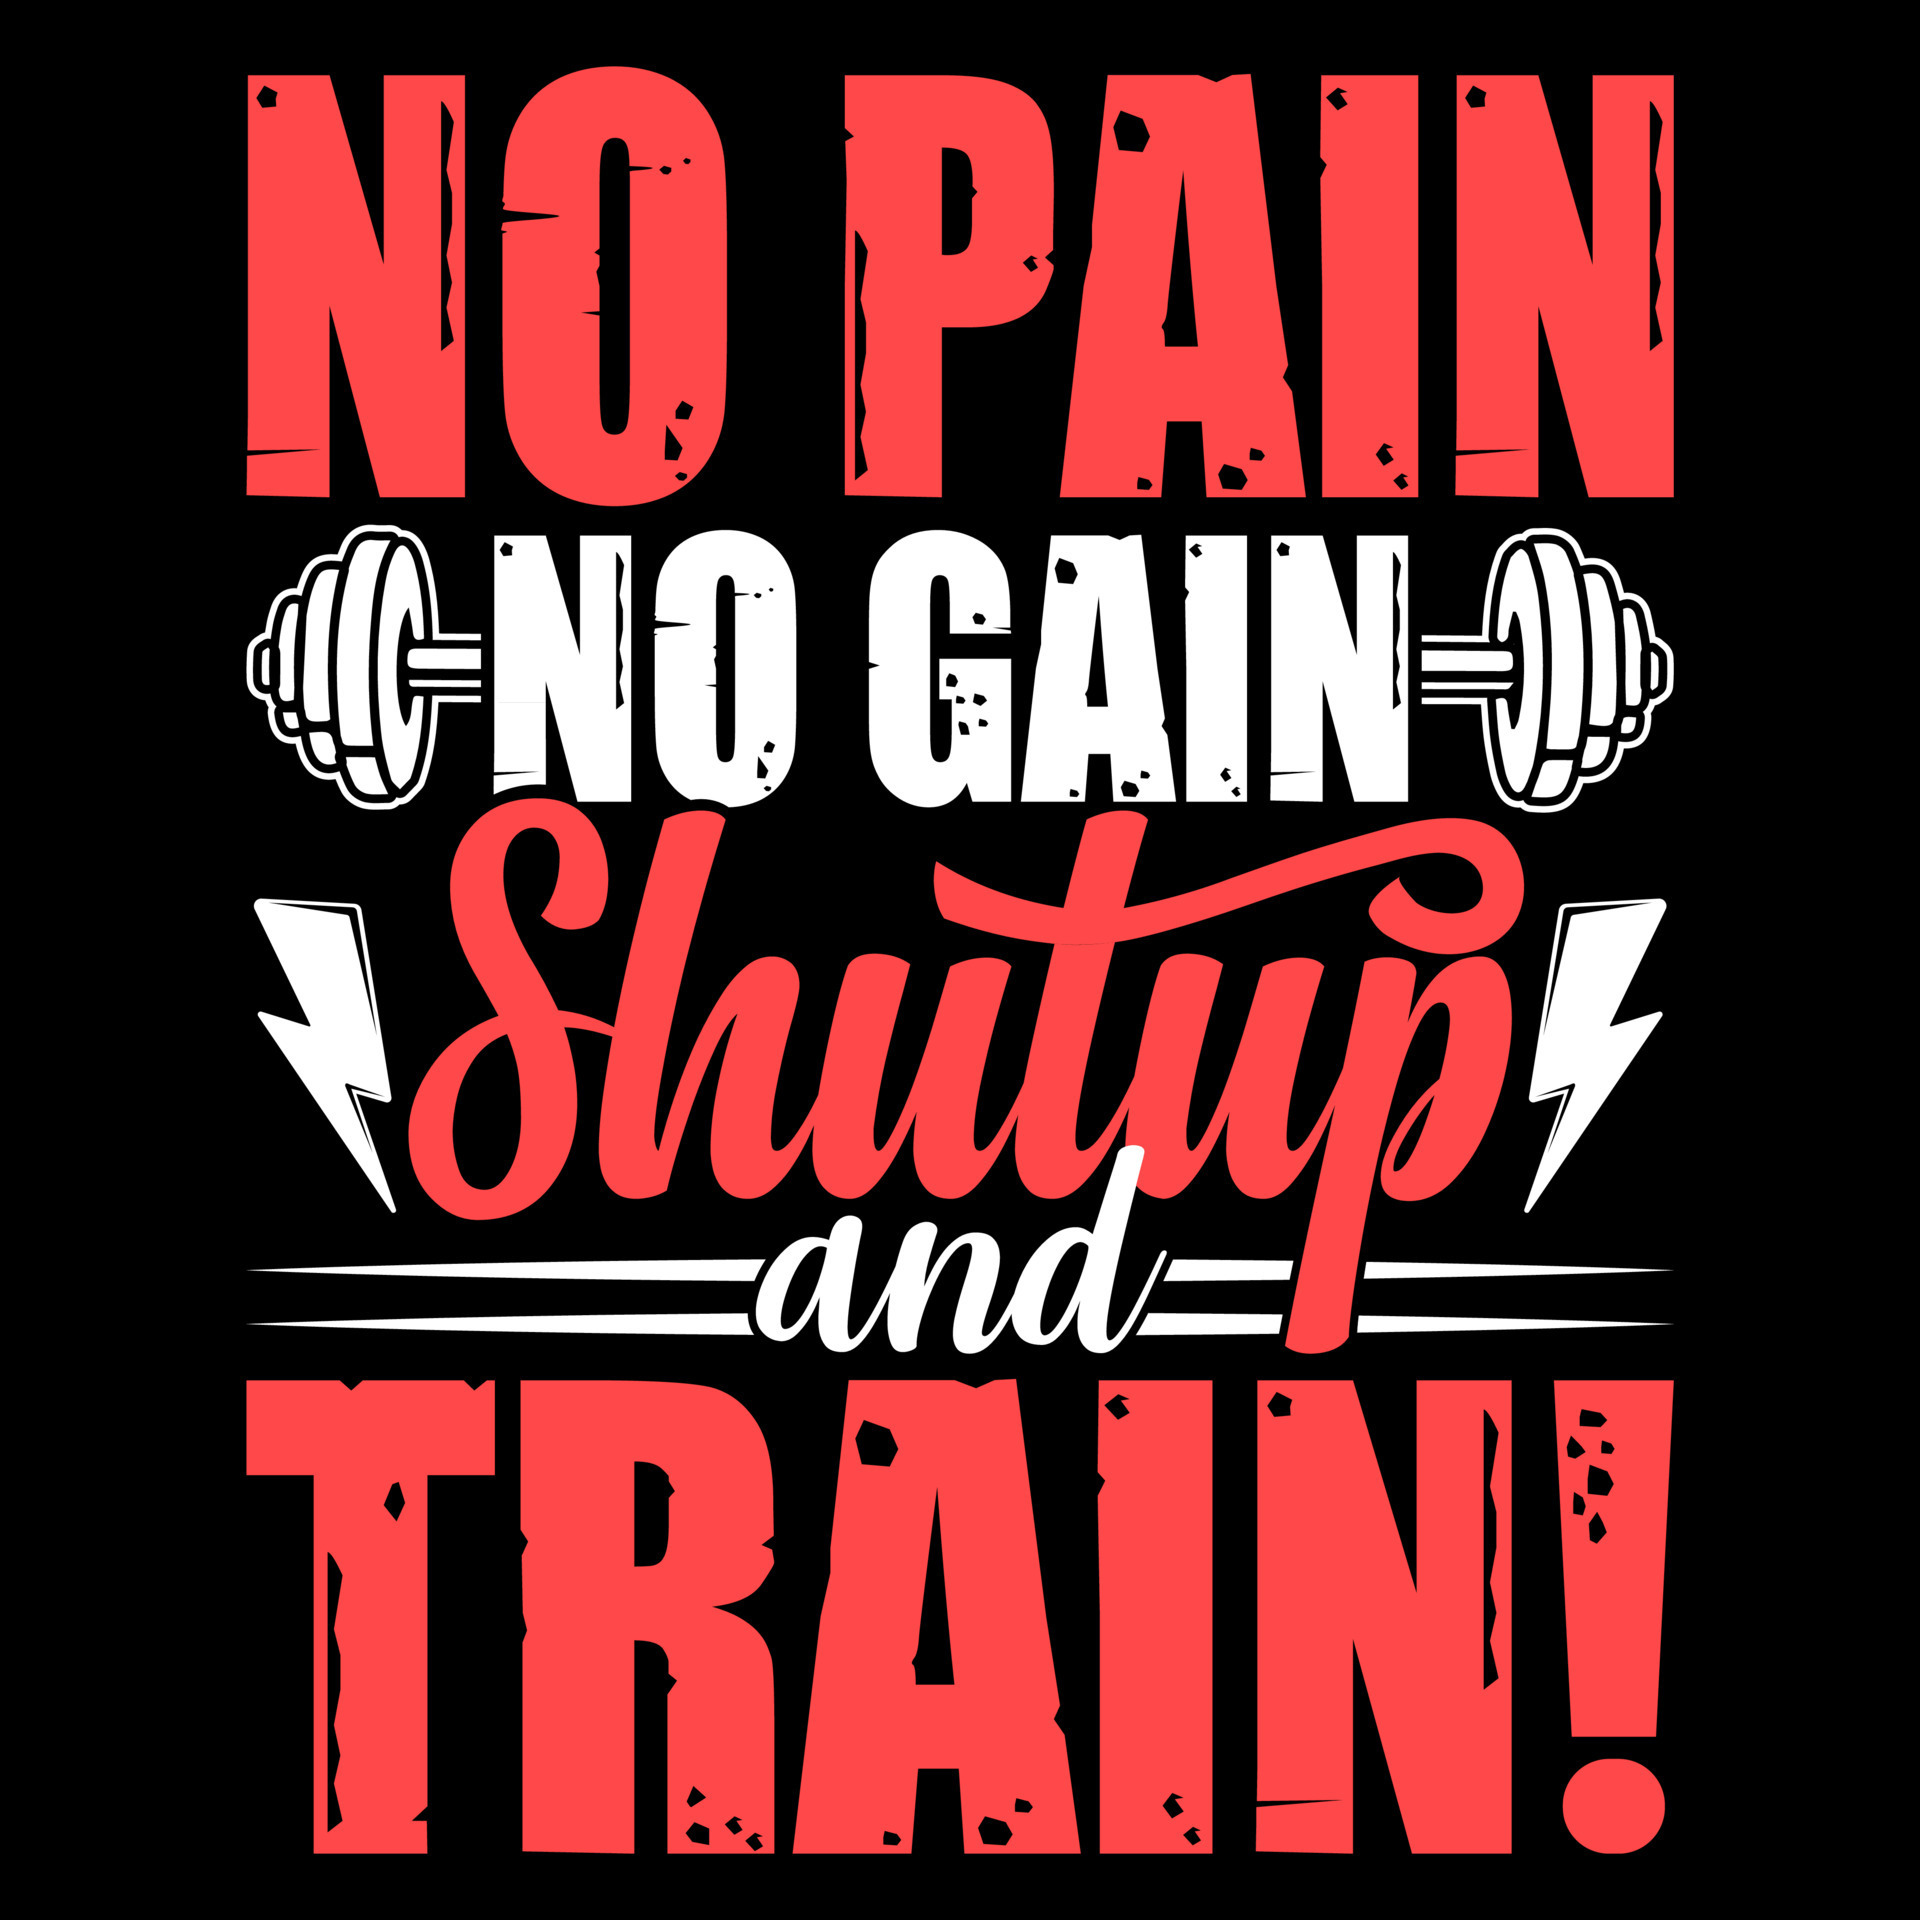 Typography gym t shirt design, motivational quotes for workout, Bodybuilding element 10945050 Vector Art Vecteezy